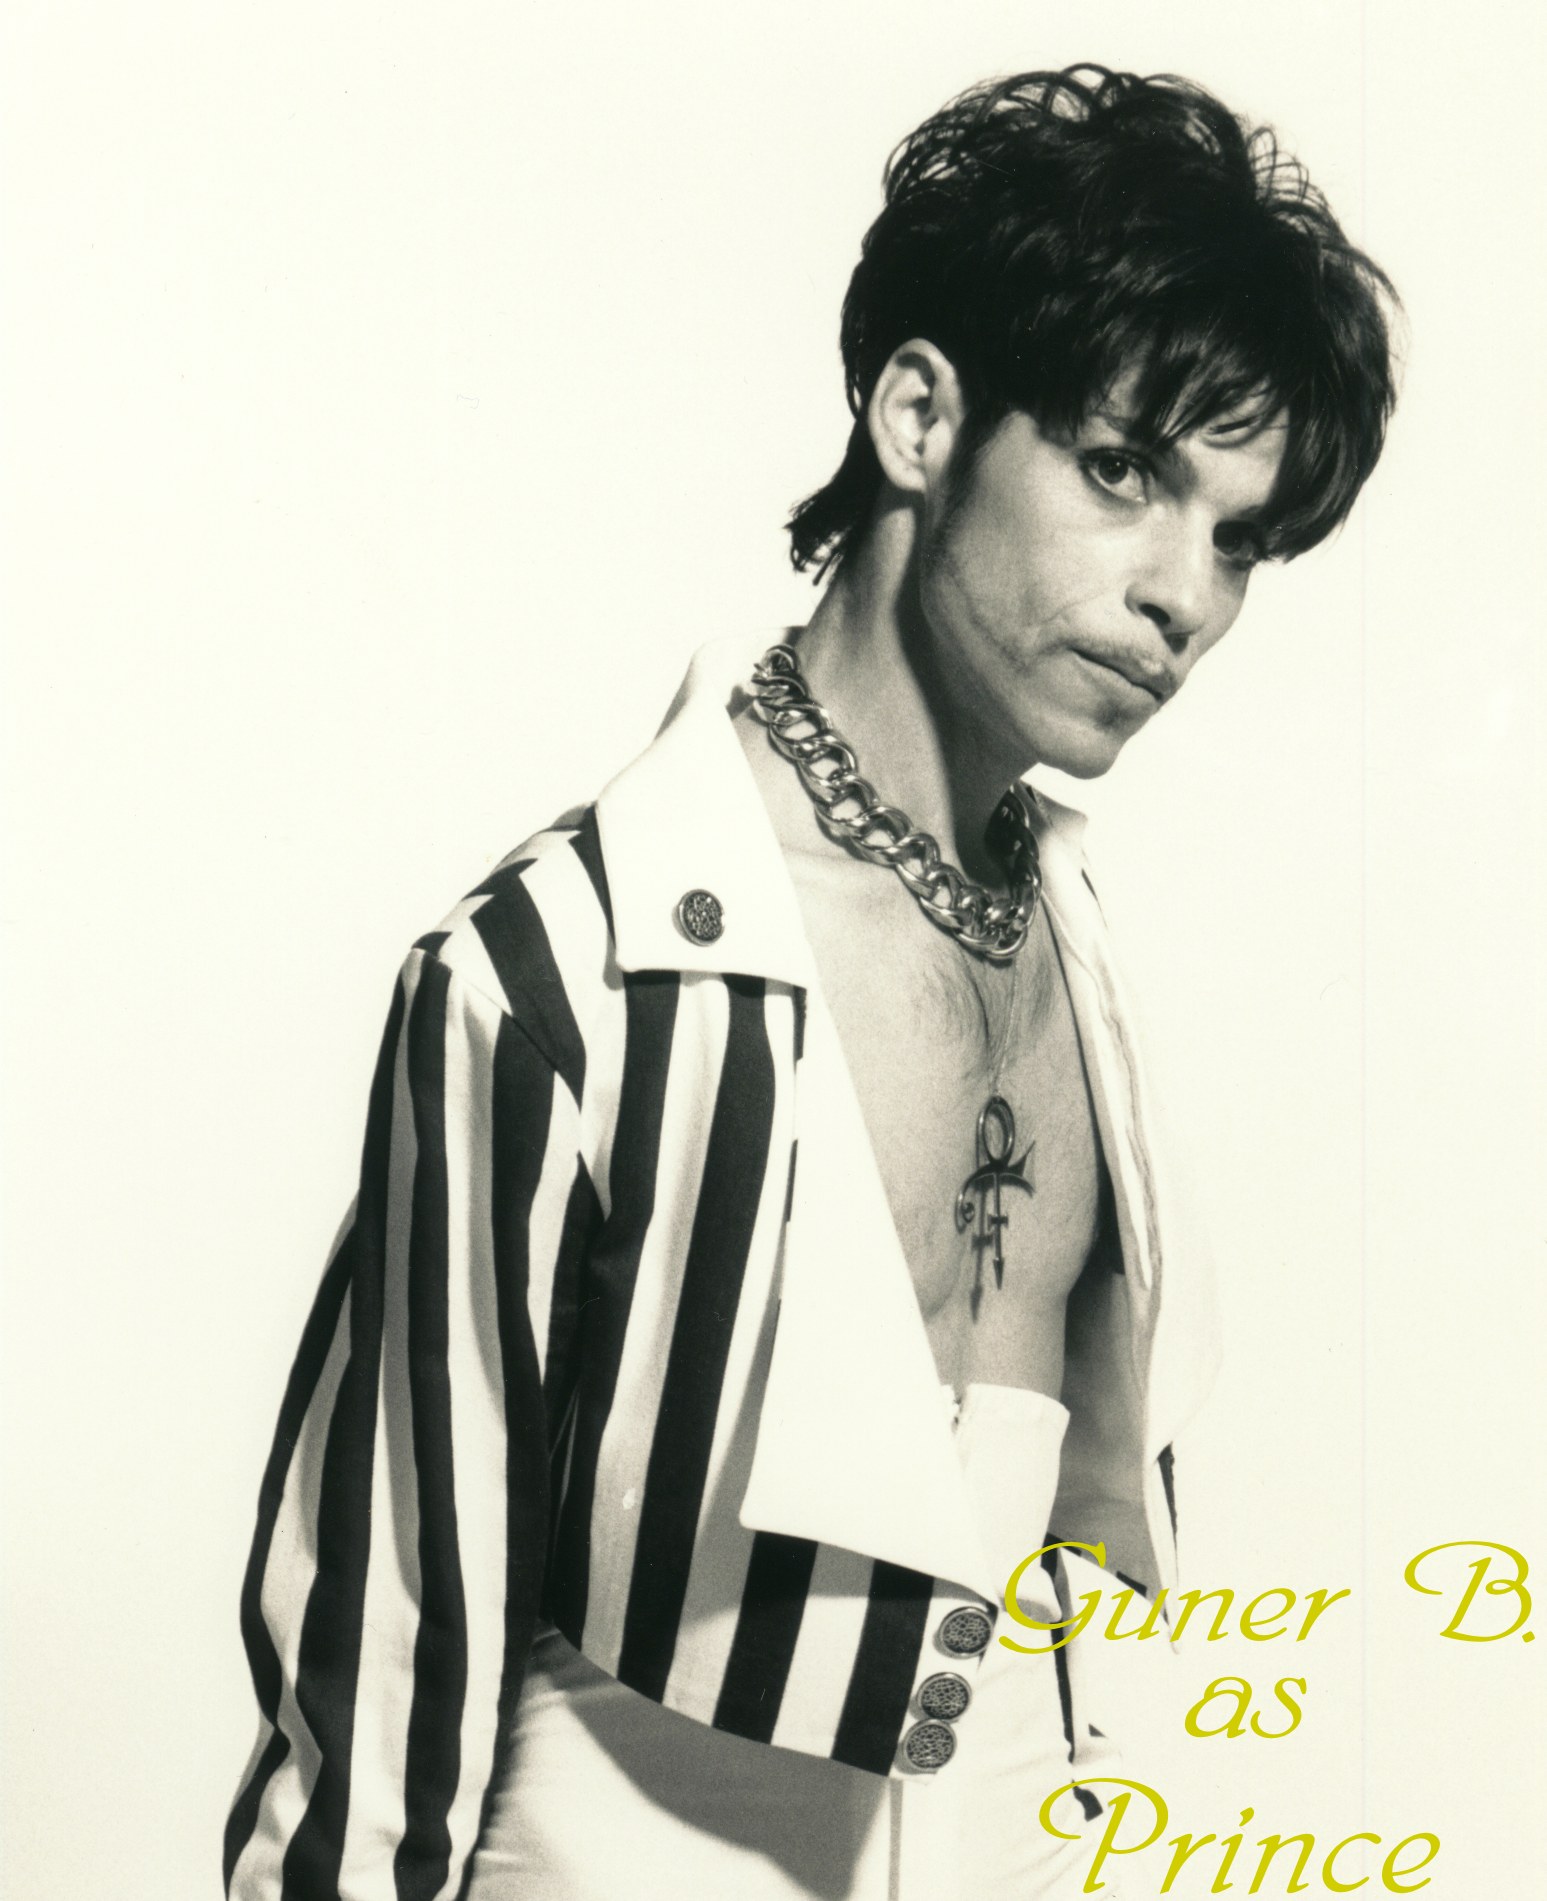 Guner B. as Prince